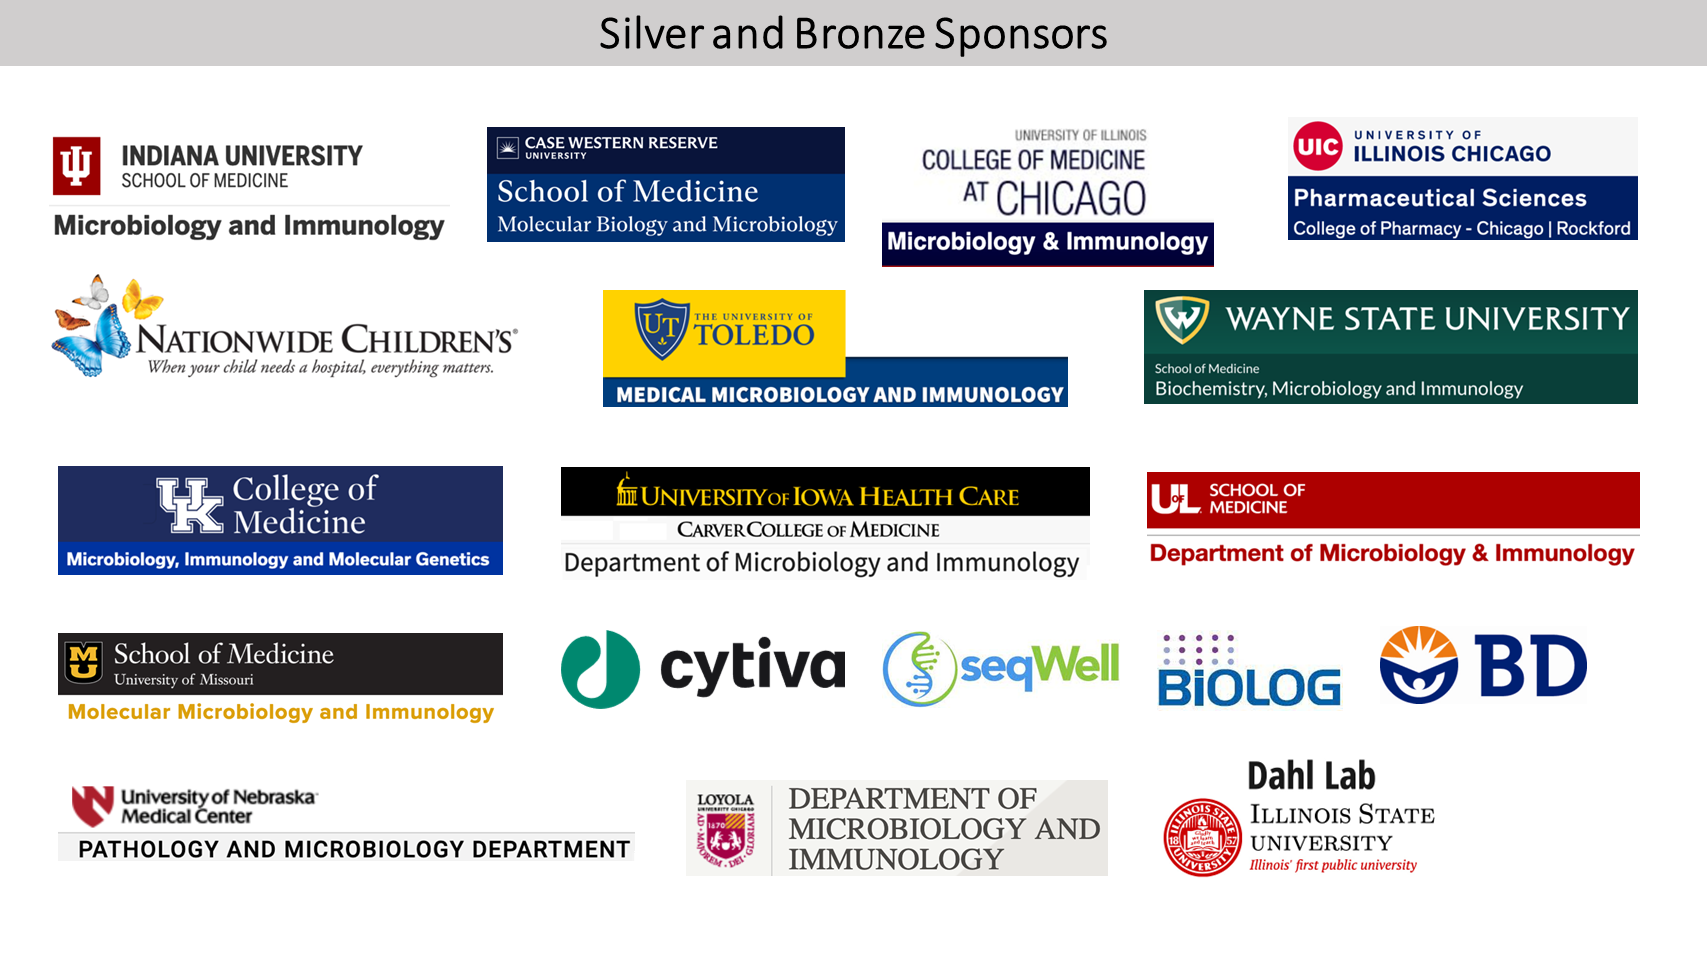 Silver and bronze sponsor logos